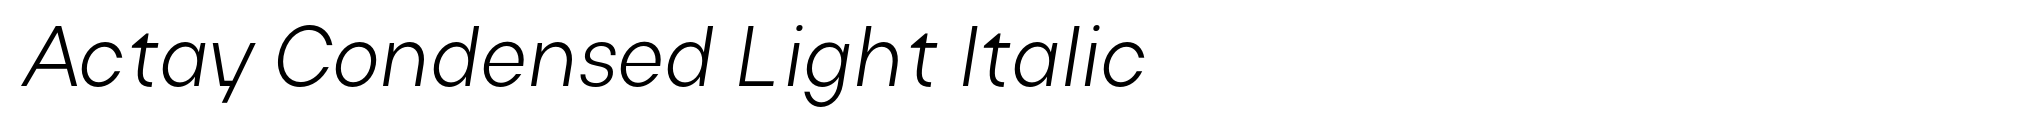 Actay Condensed Light Italic image